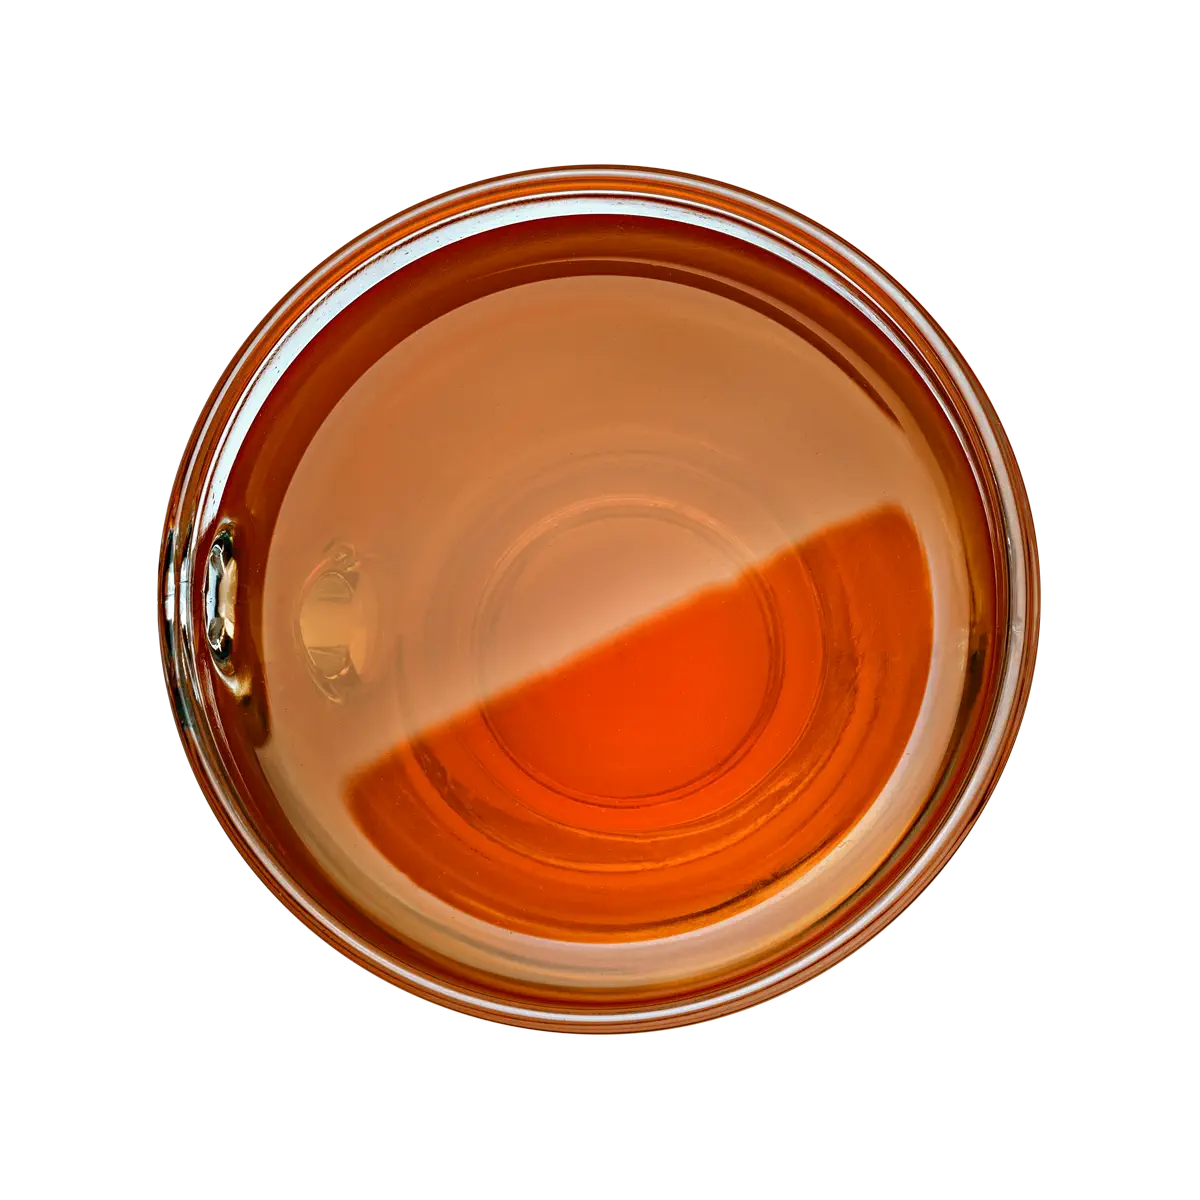 【 COLD BREW 】No.5紅玉紅茶(ルビー紅茶)30包入り